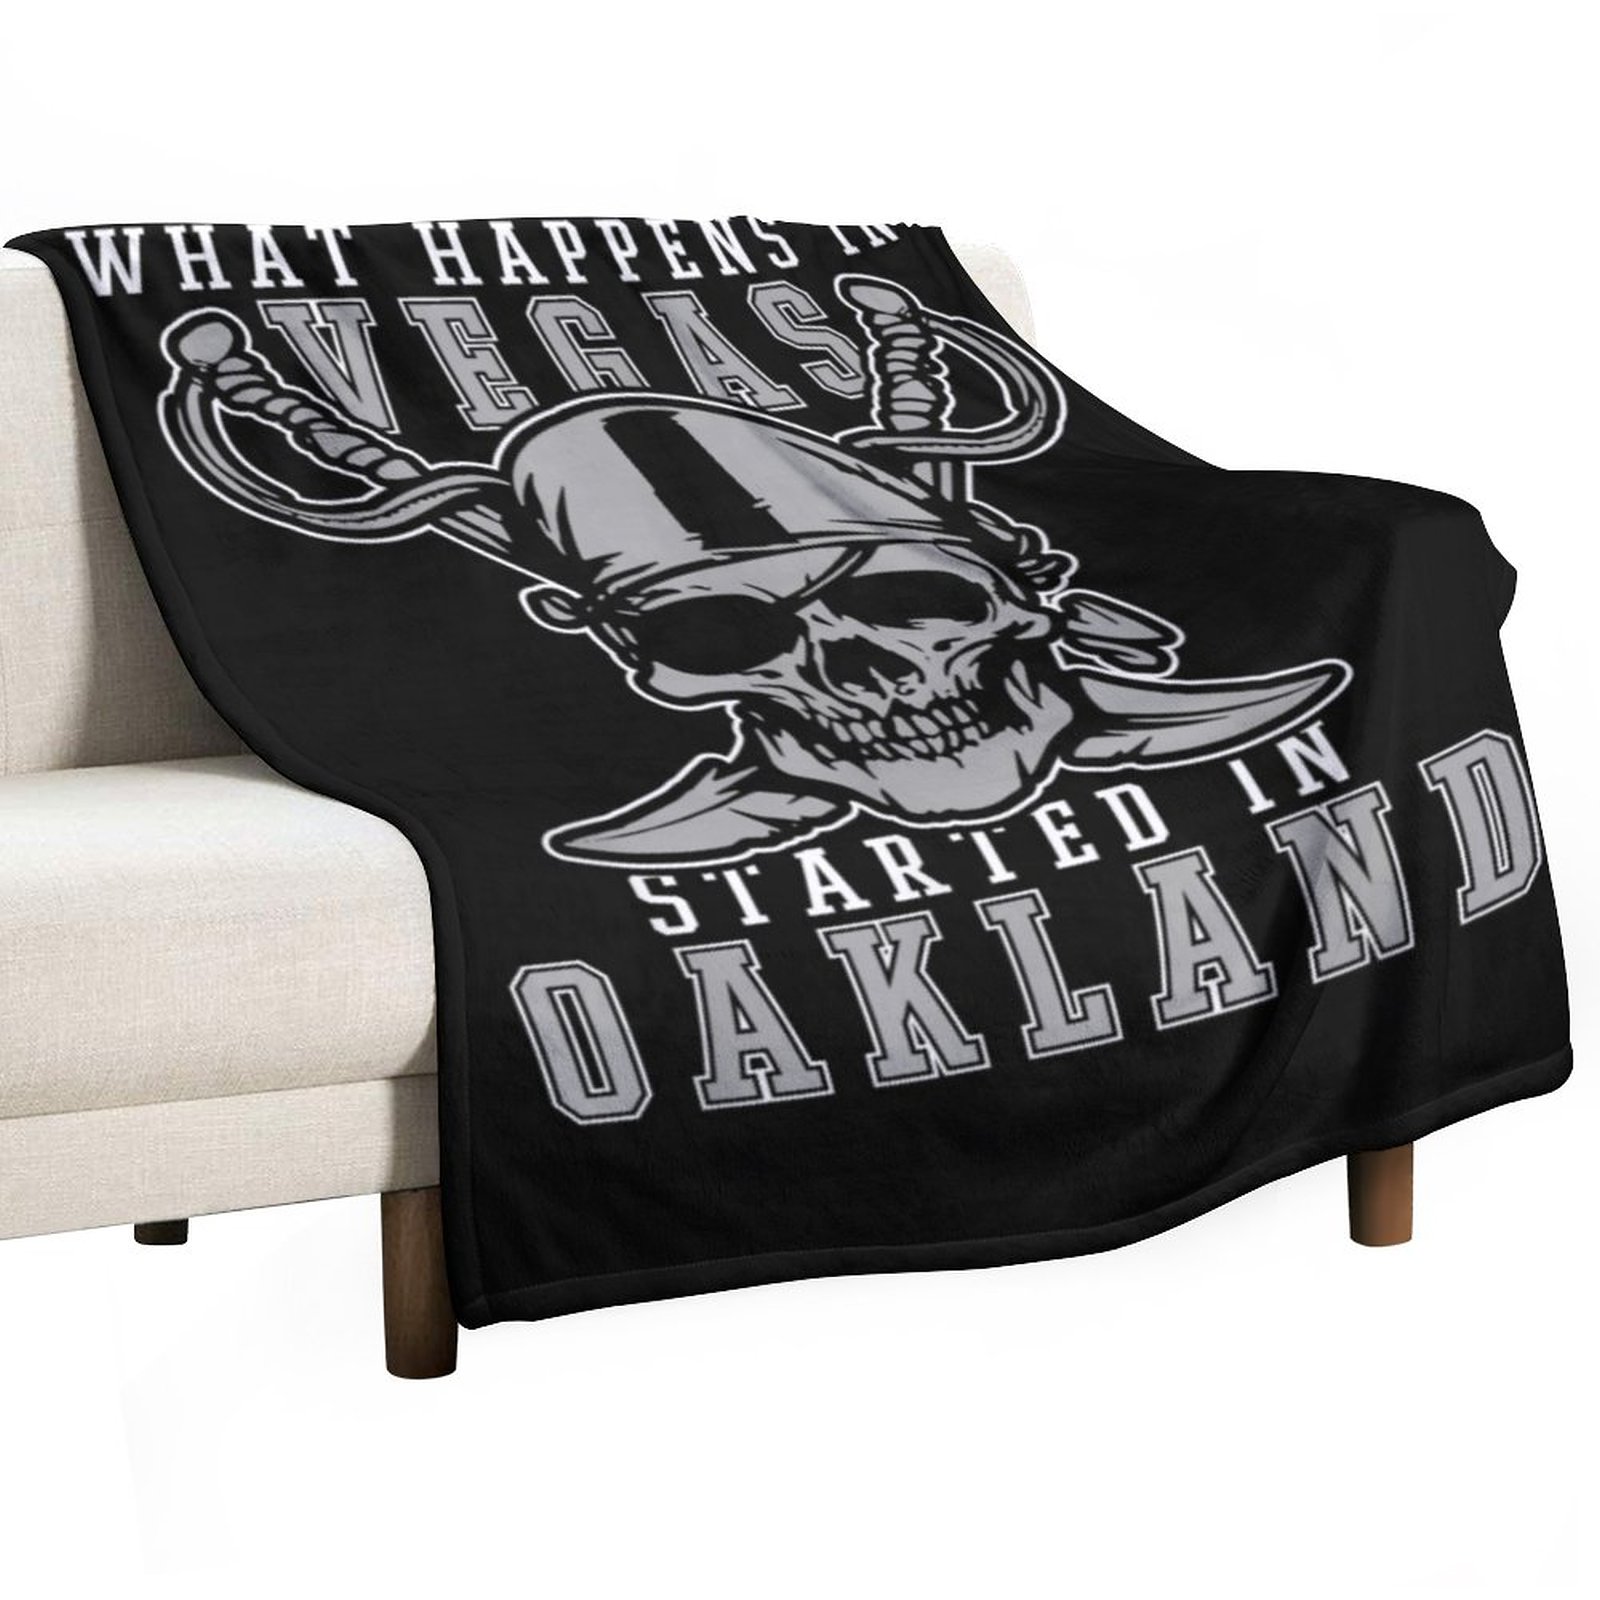 Quello che succede a Las Vegas è iniziato a Oakland Football Raider T-shirt Throw Blanket Kid's Blanket Luxury Brand Blanket